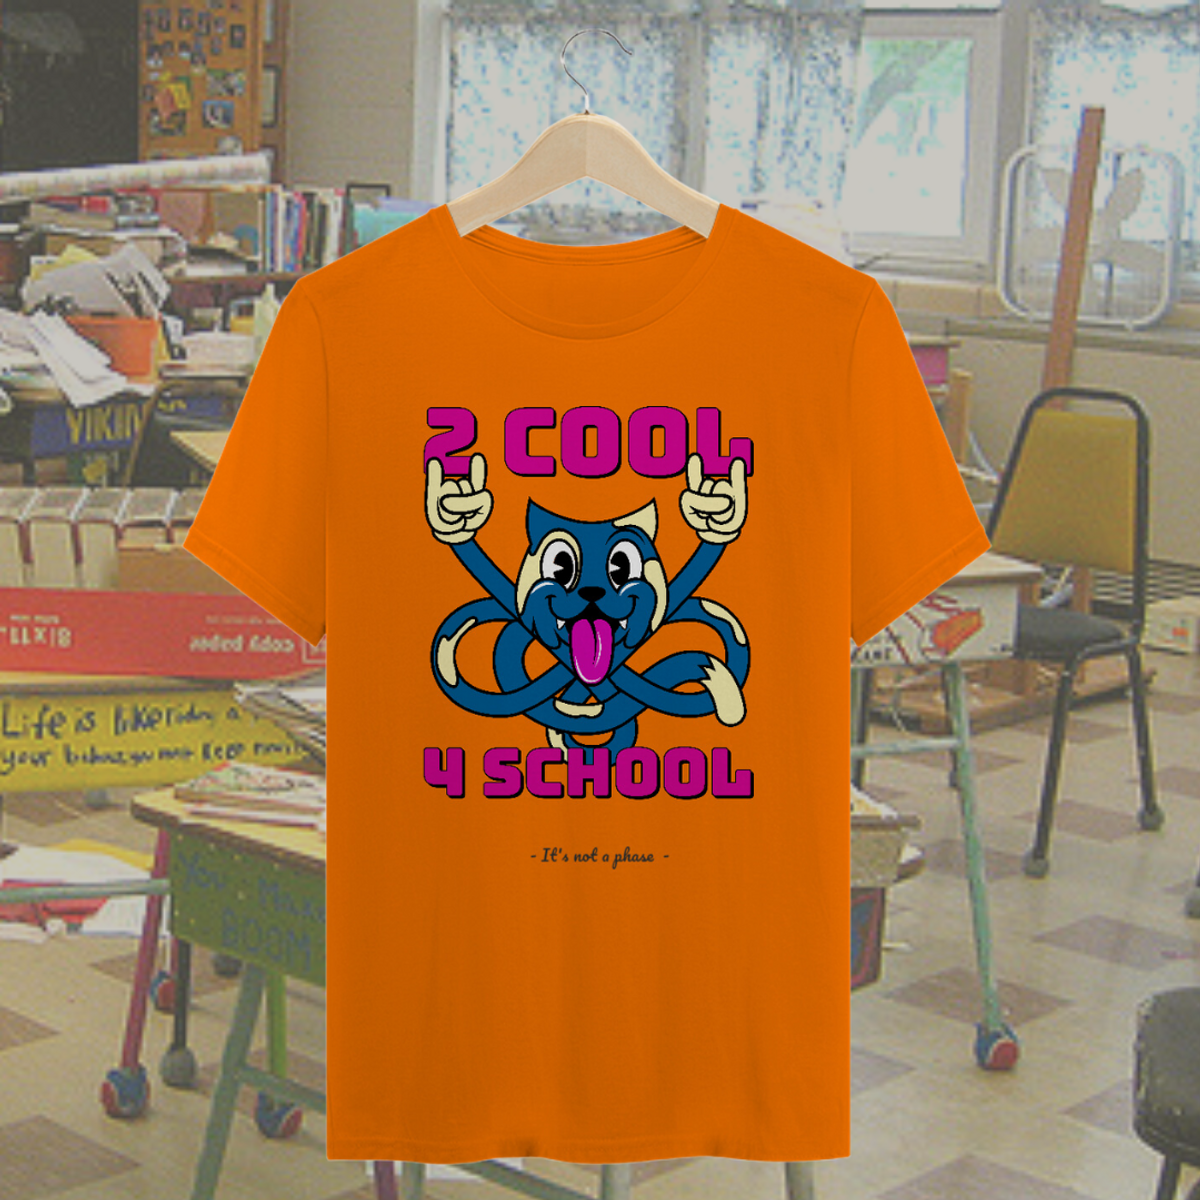 Nome do produto: Camiseta 2 cool 4 school